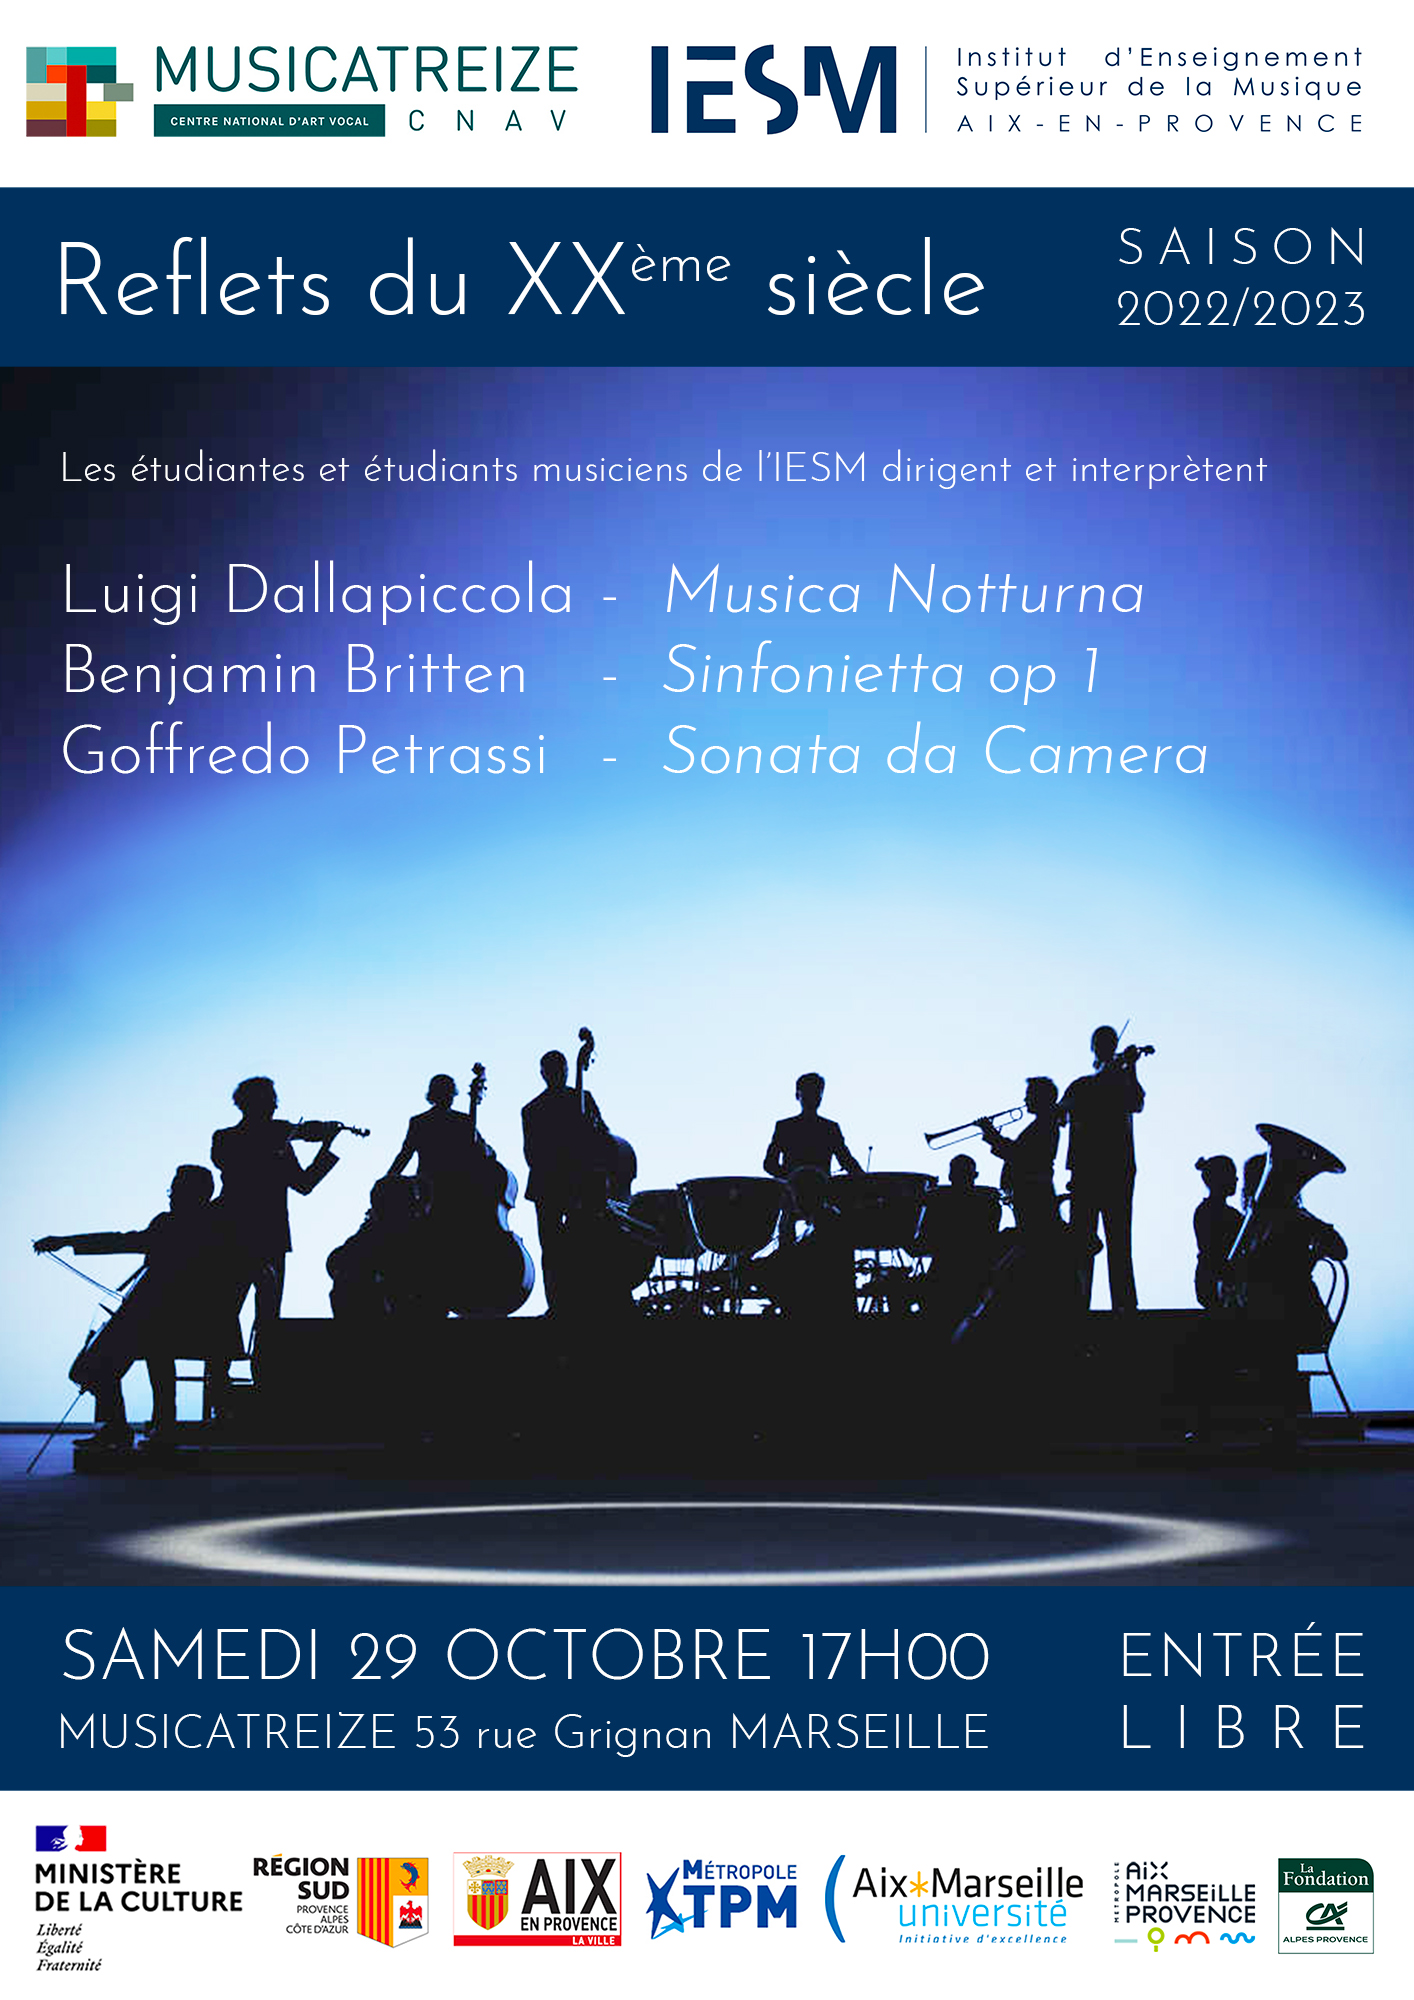 Concert 29 octobre 2022 Musicatreize Affiche A3